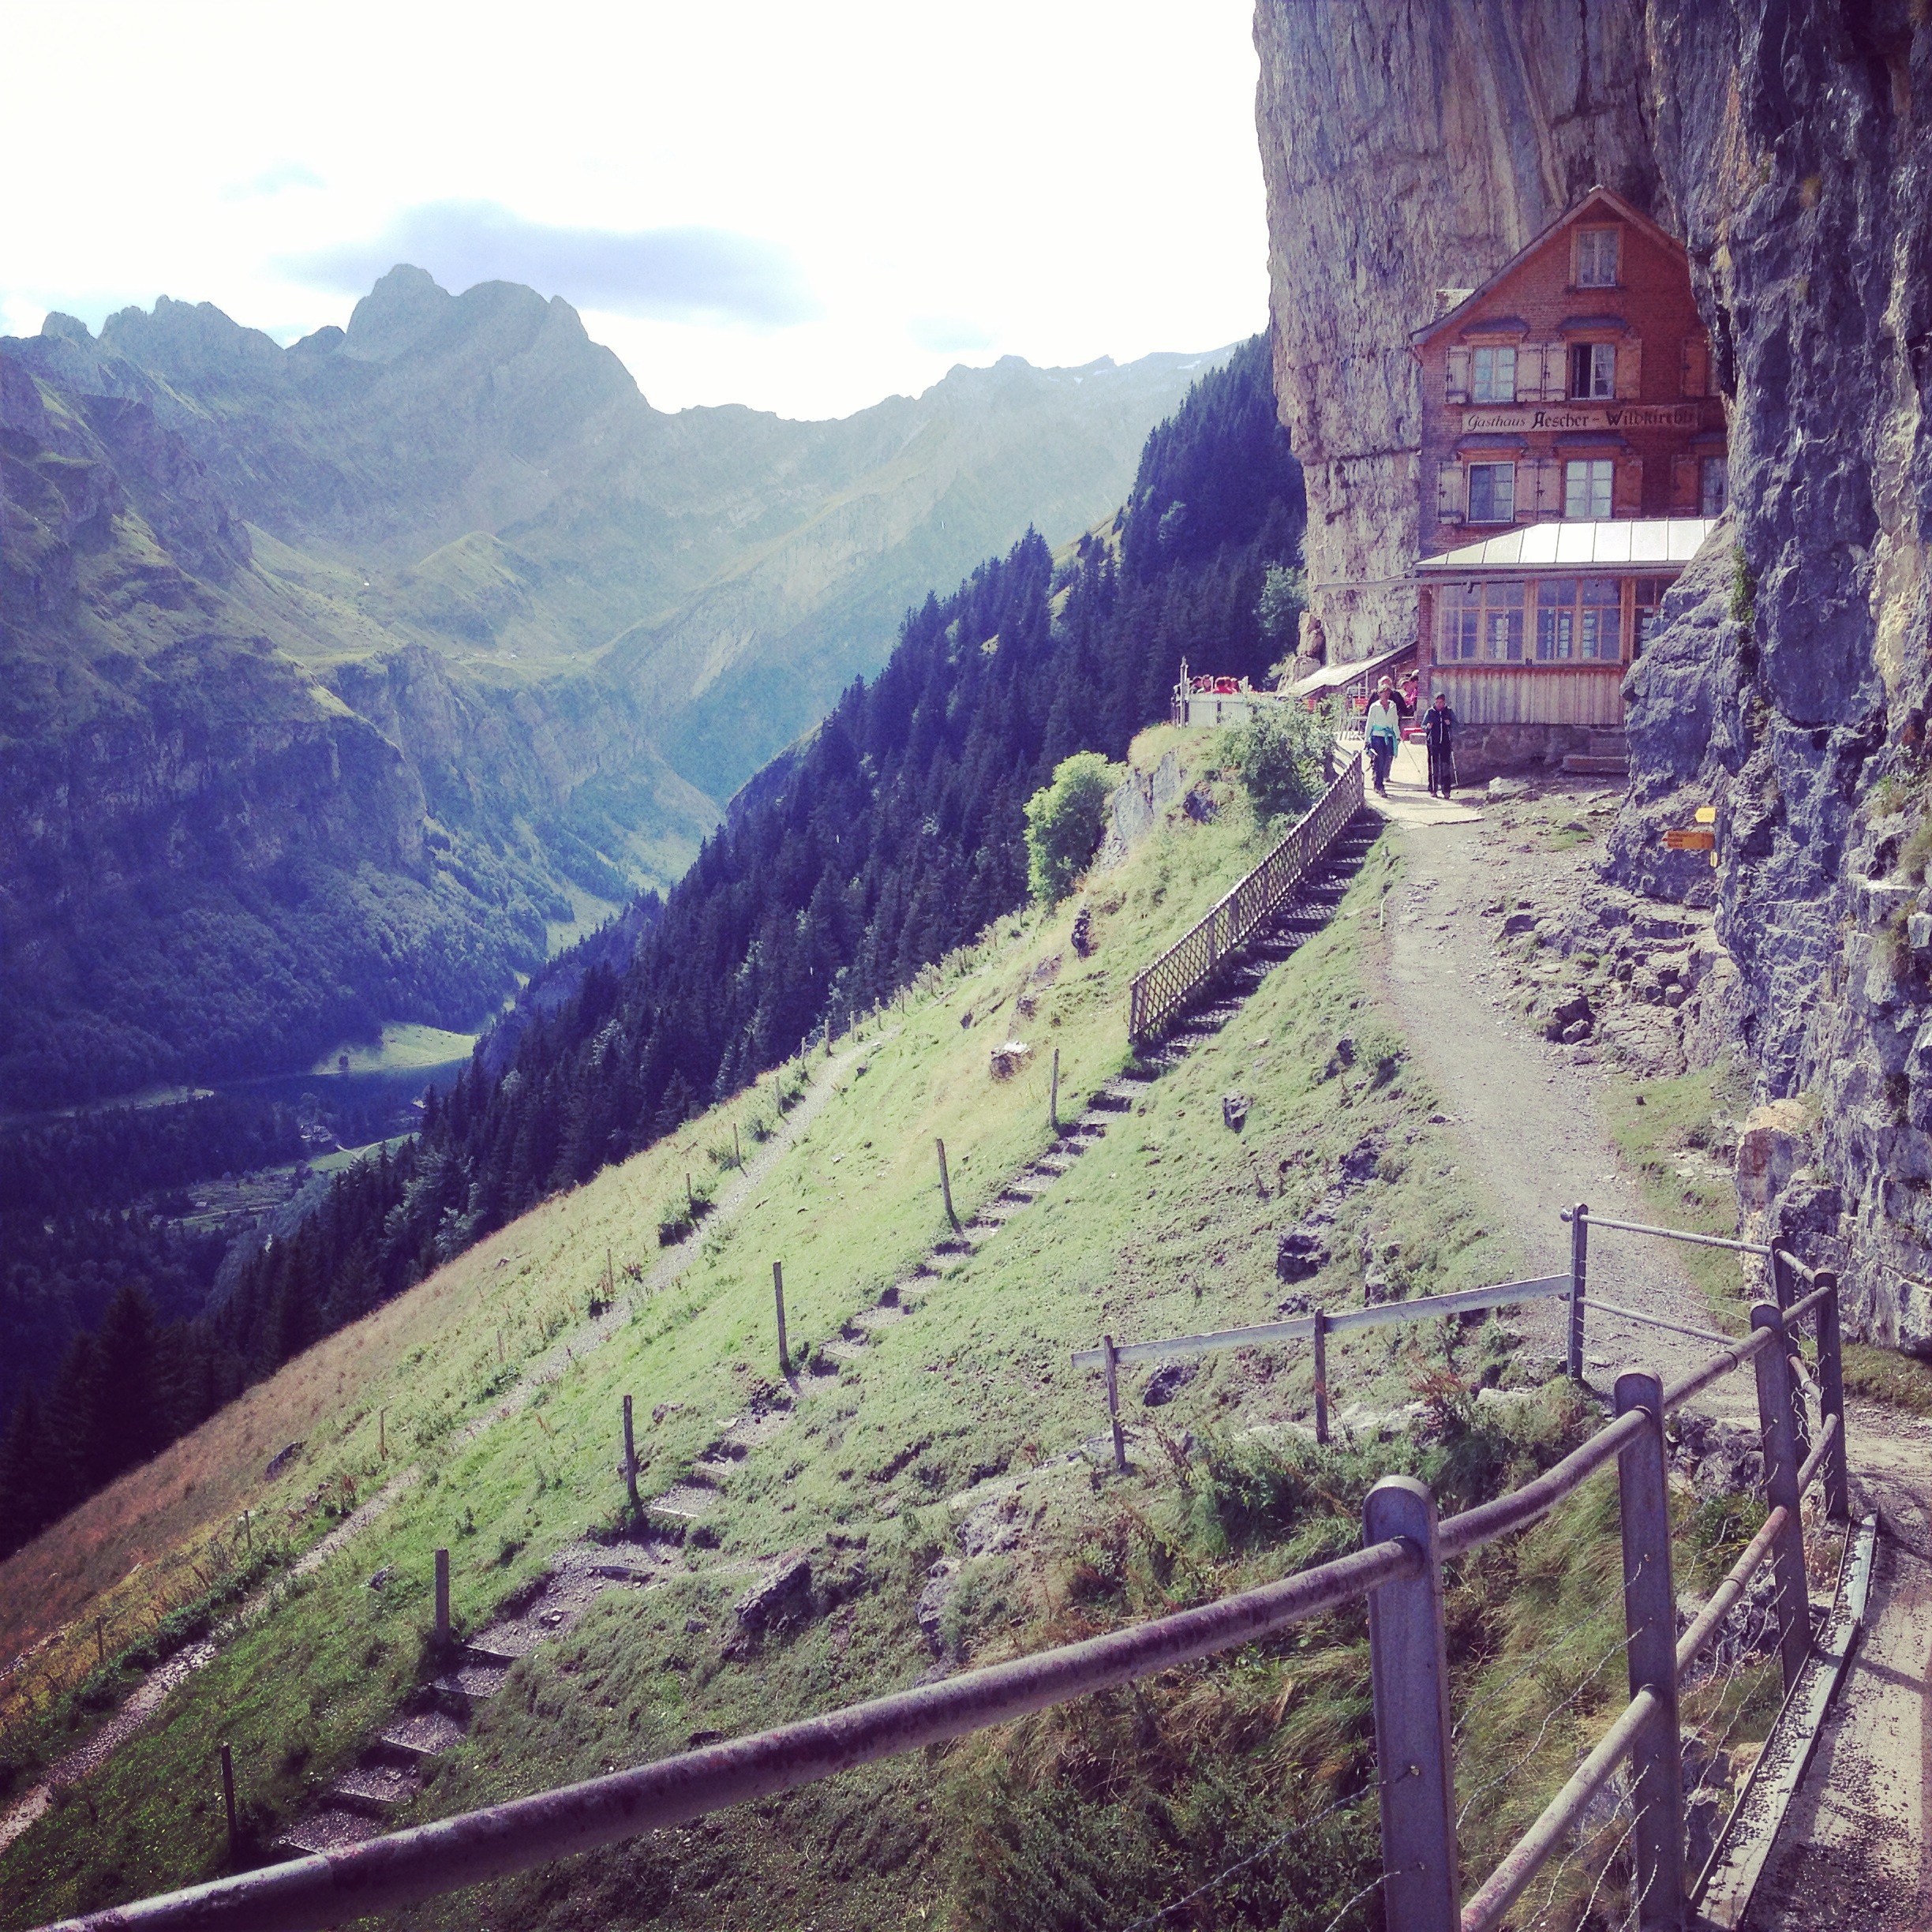 Aescher: a cliffside hotel in the Swiss Alps